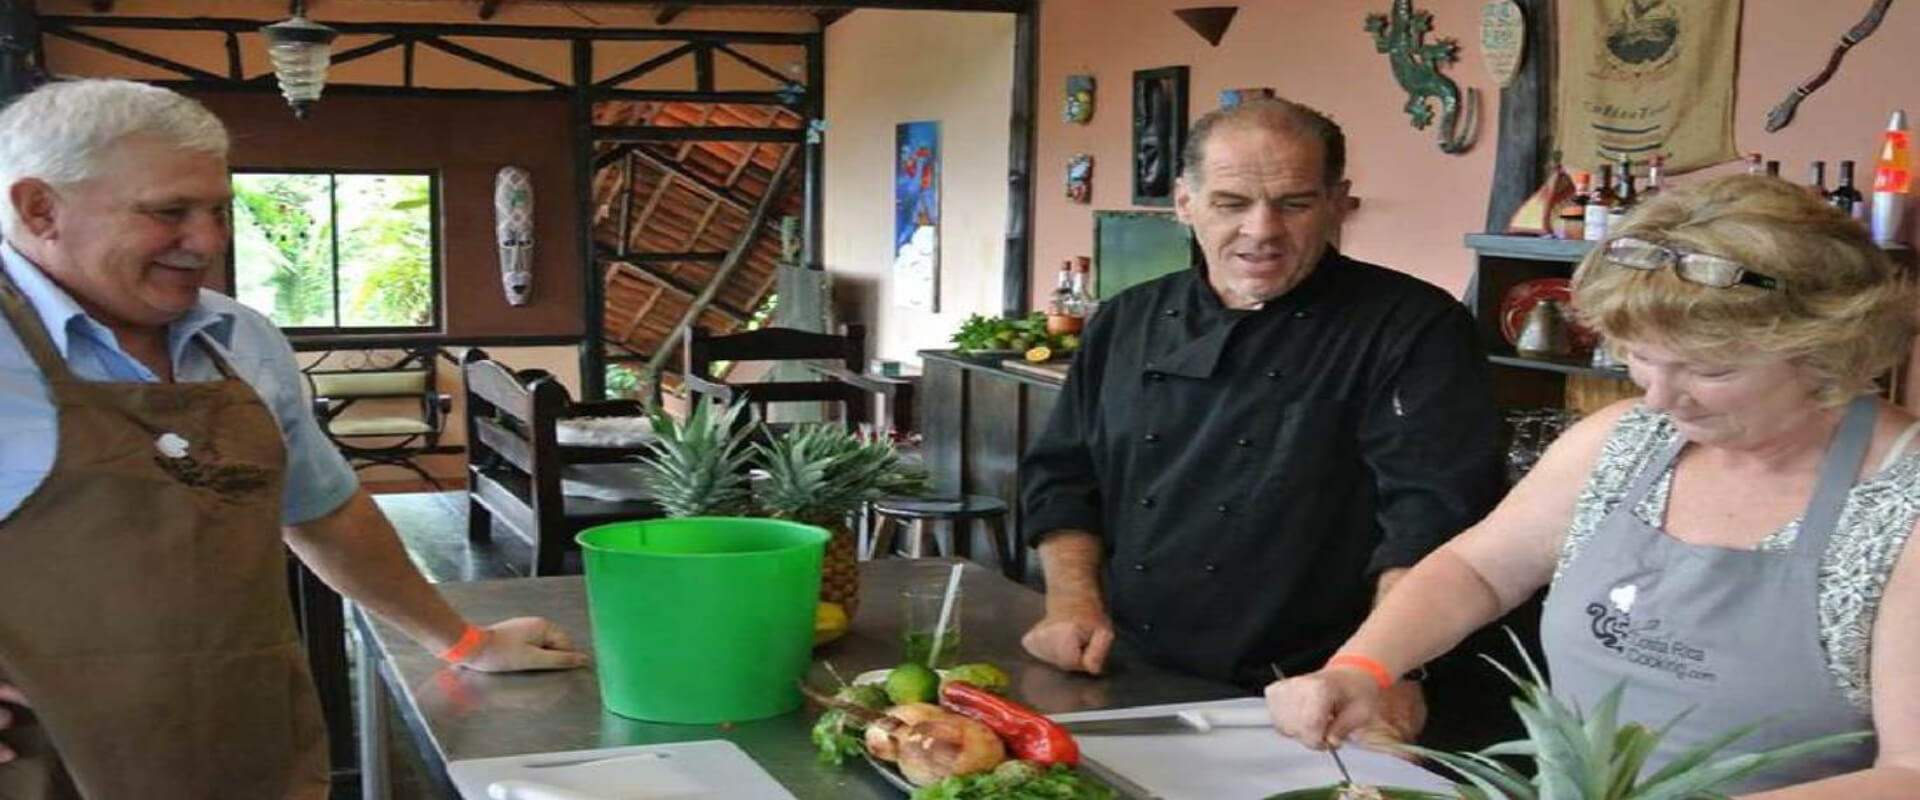 Clase de cocina de Casa Rústica | Costa Rica Jade Tours